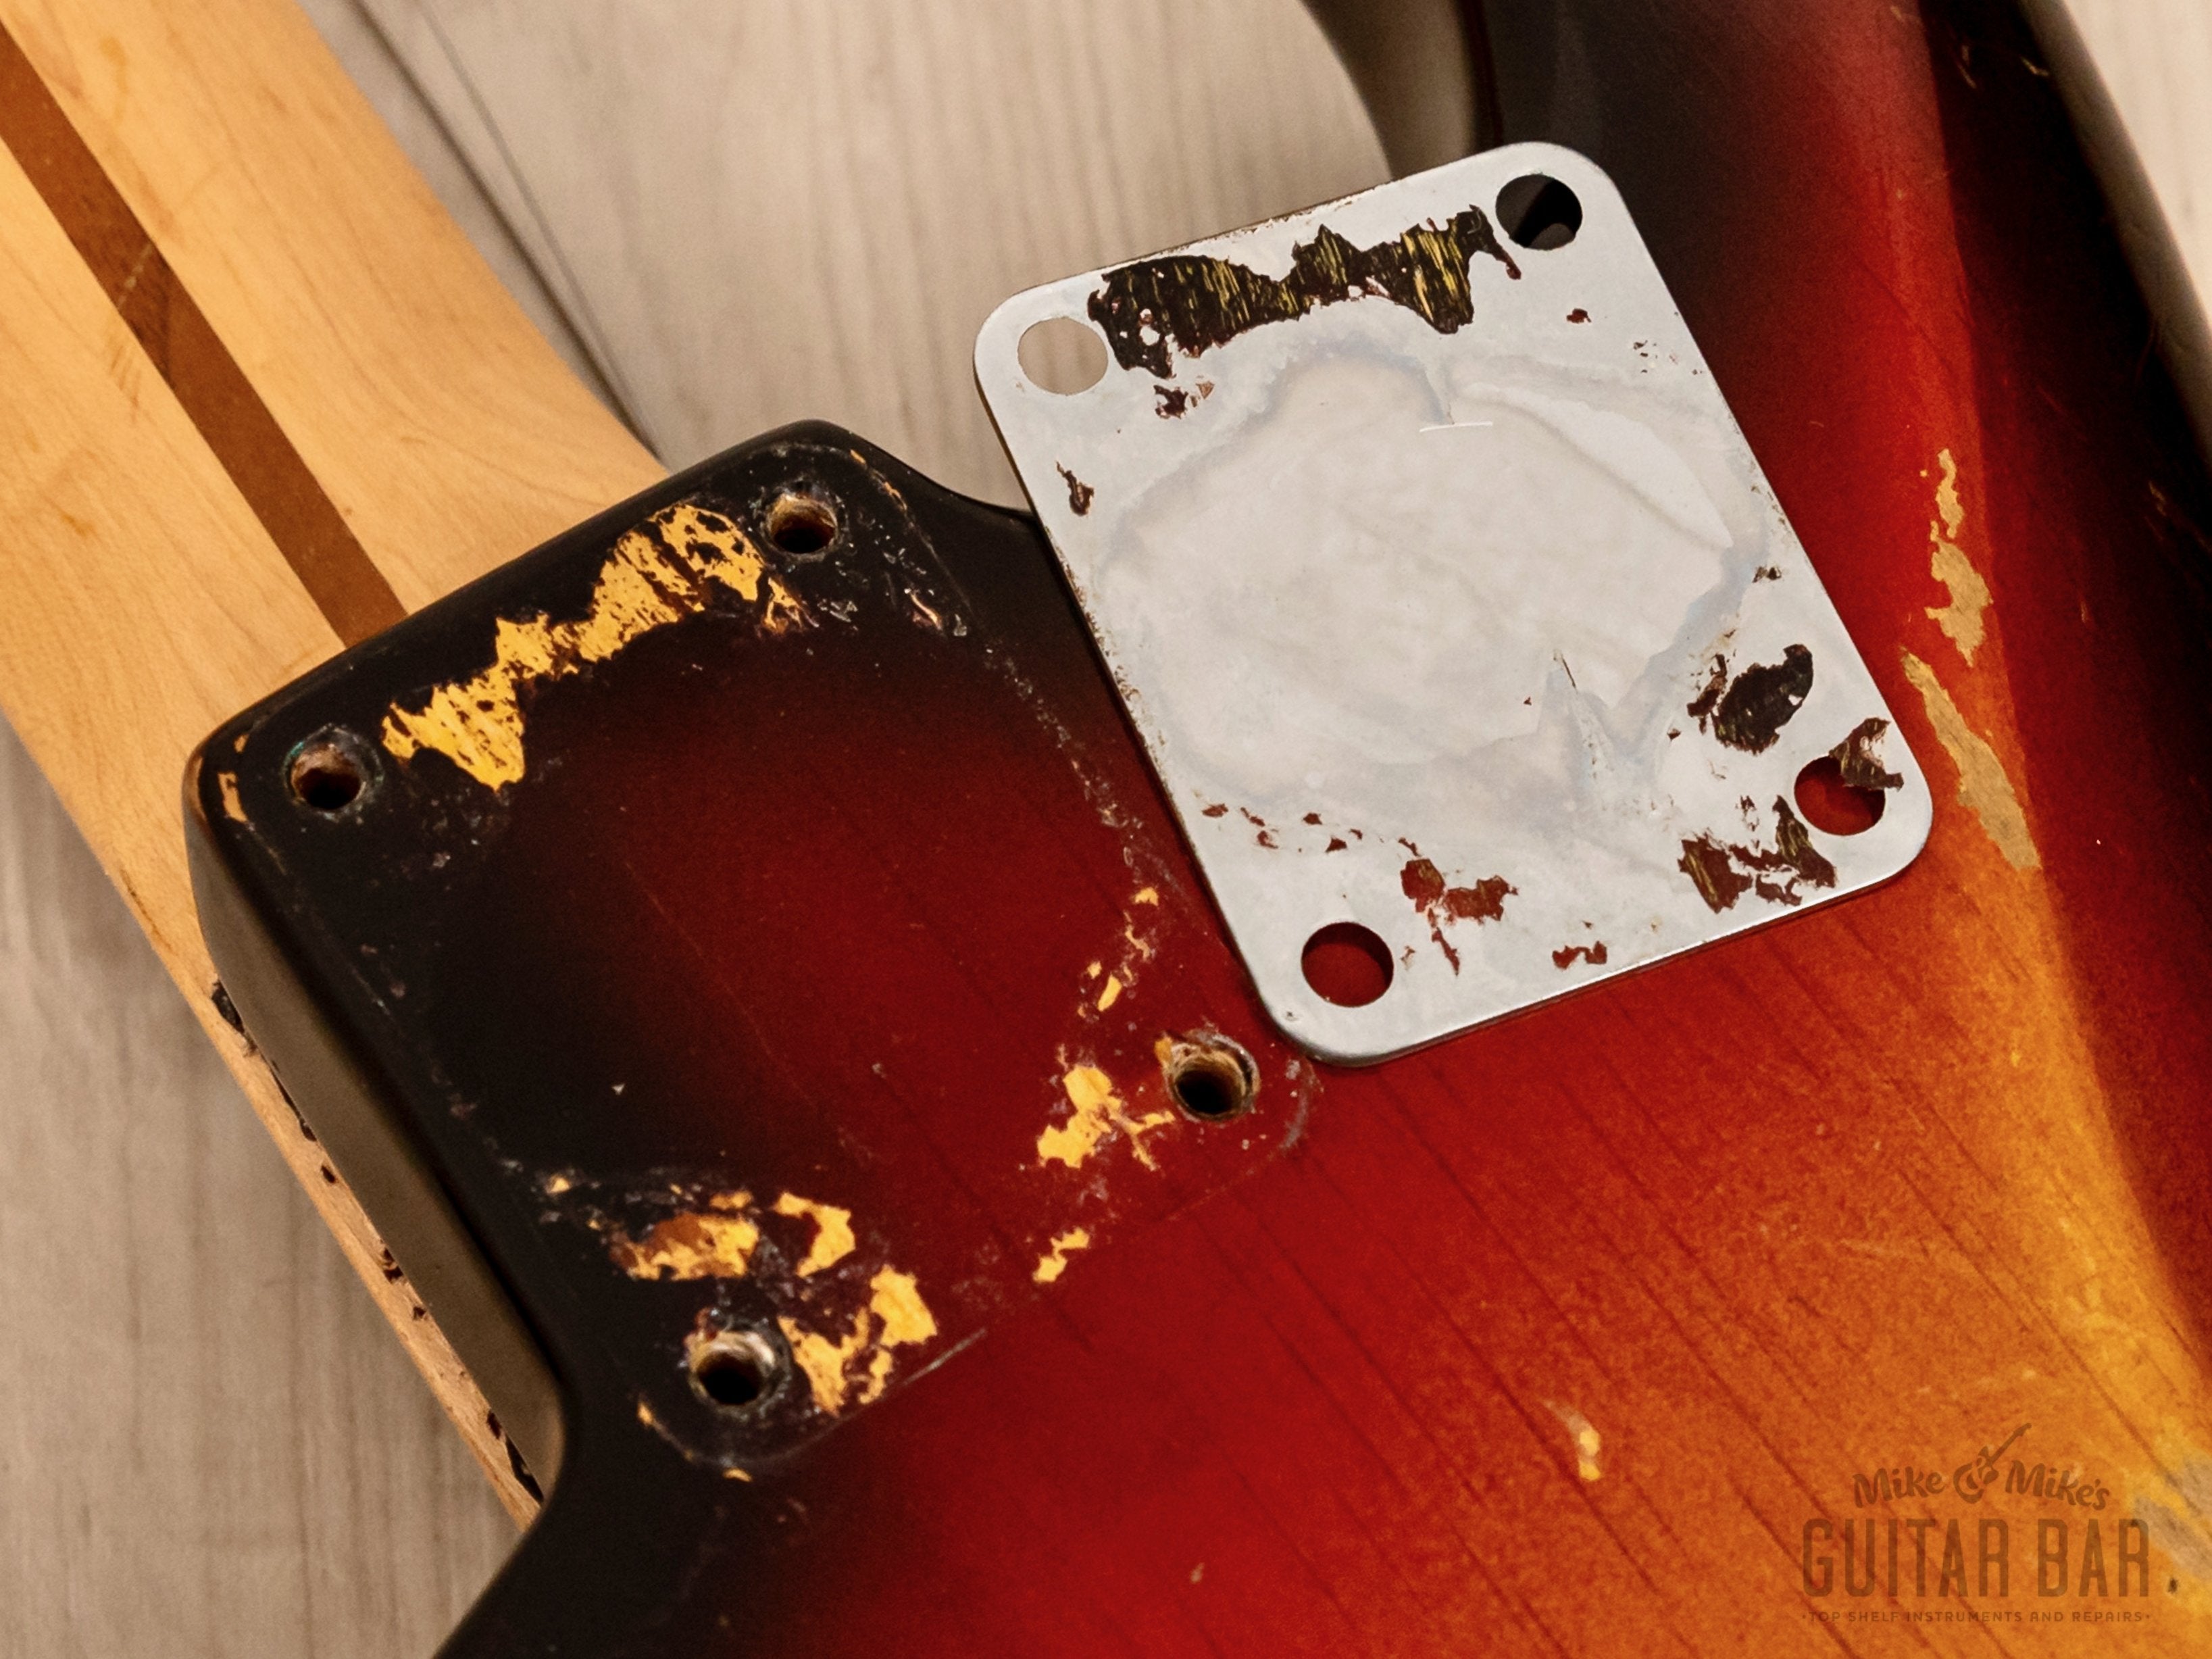 1959 Fender Stratocaster Vintage Guitar, Collector-Grade w/ Tweed Case